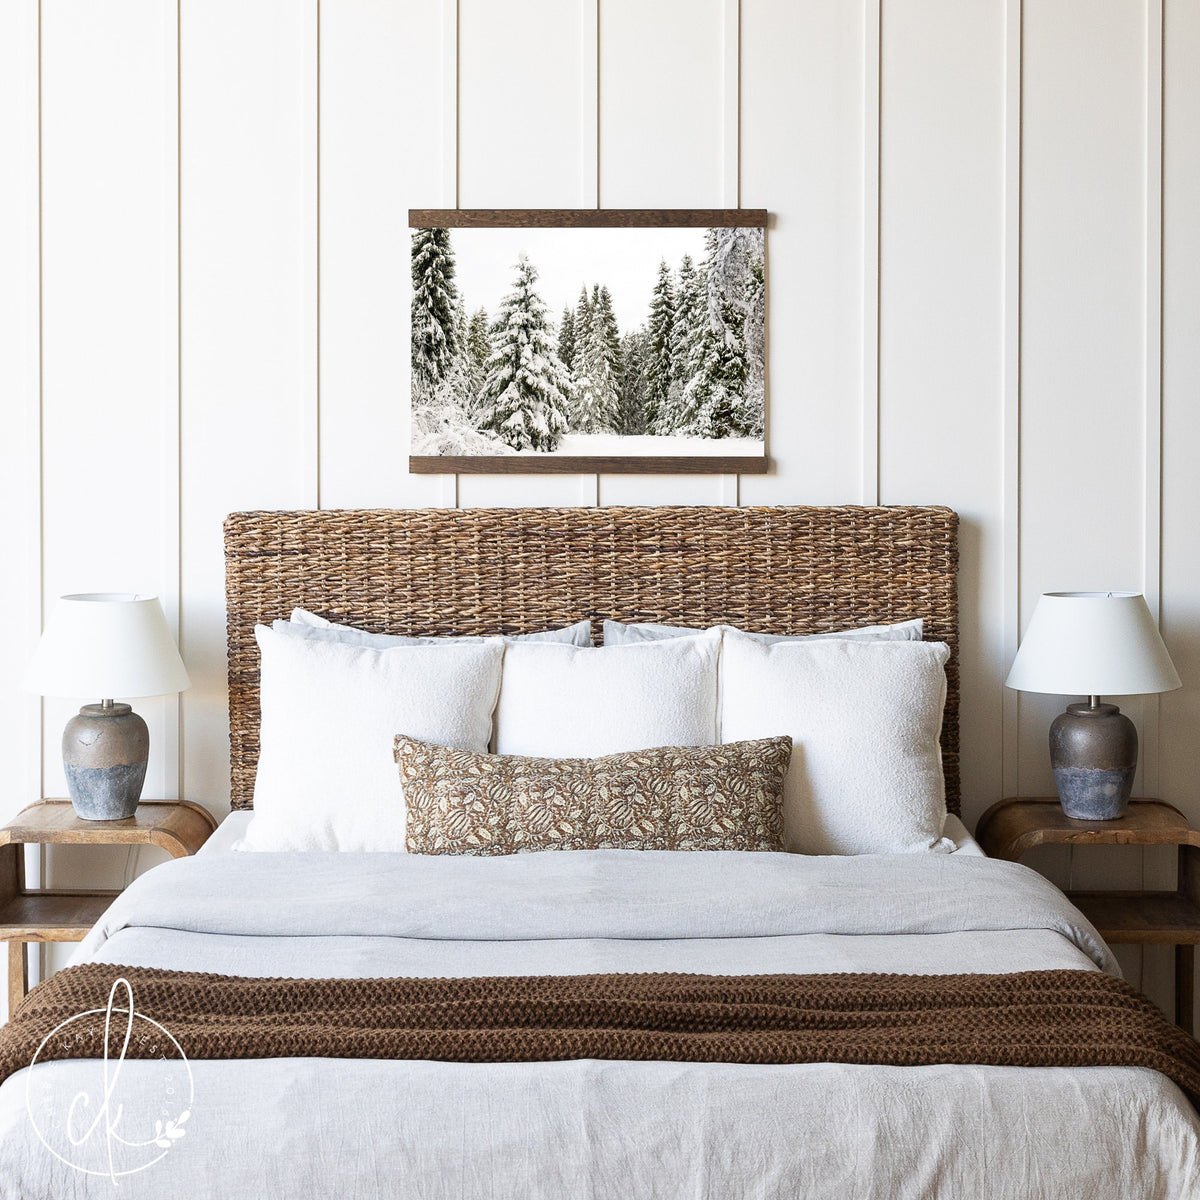 Winter Pines Tapestry Art | Landscape Wall Art | Winter Landscape | Entryway Wall Decor | Snowy Pines Wall Hanging | T42